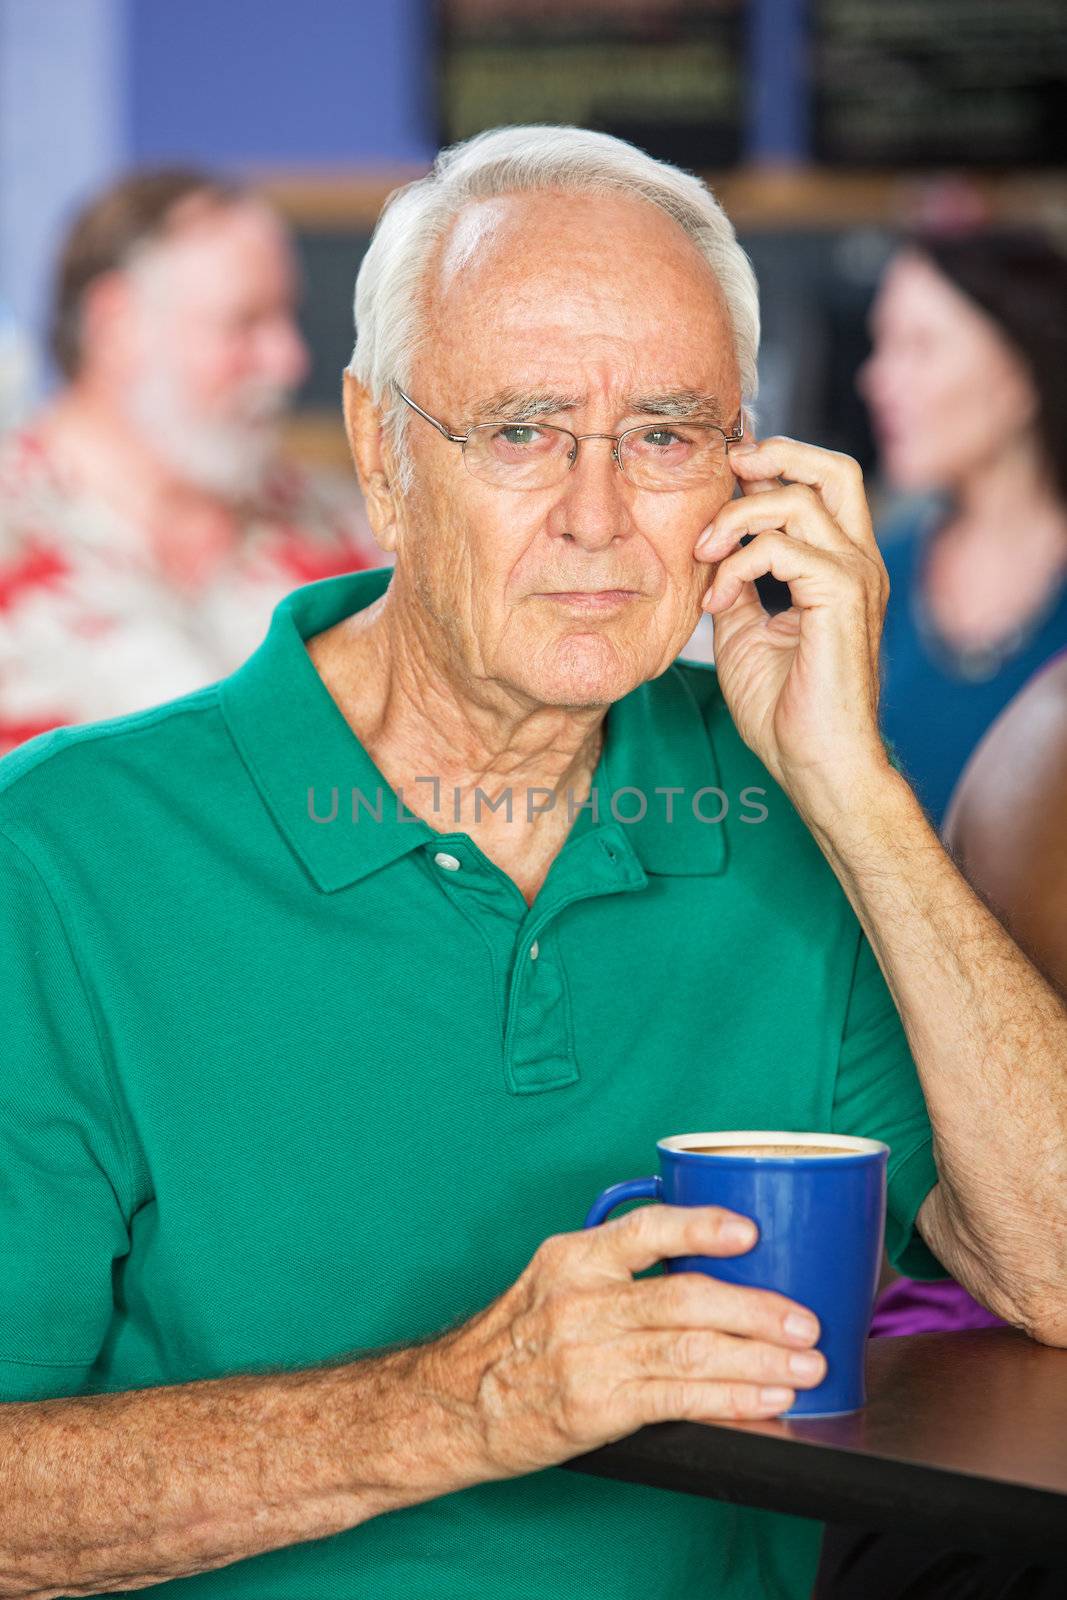 Thoughtful single senior male with coffee mug